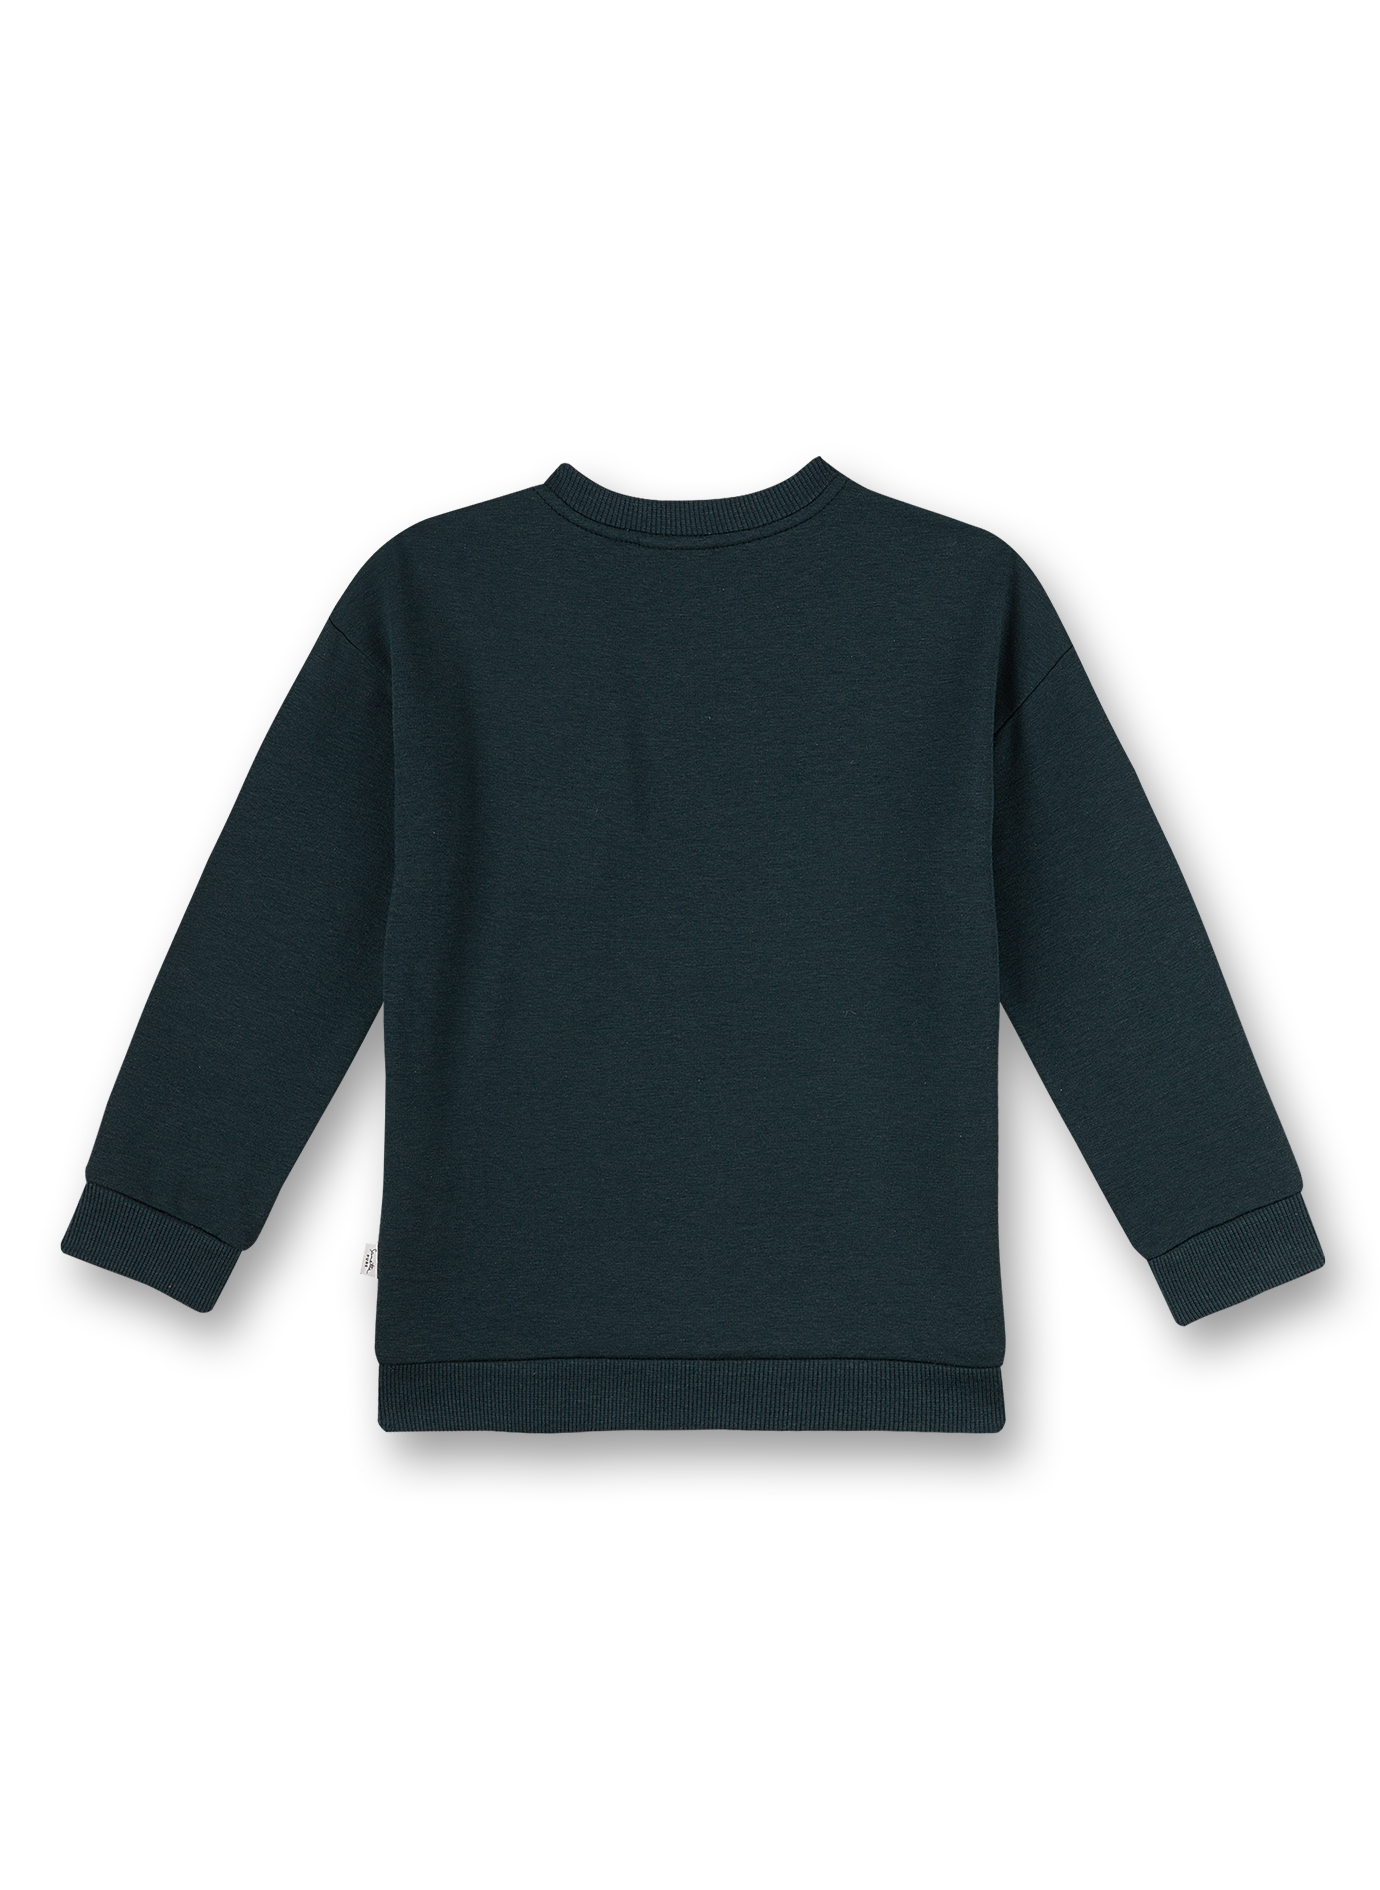 Jungen-Sweatshirt Dunkelgrün